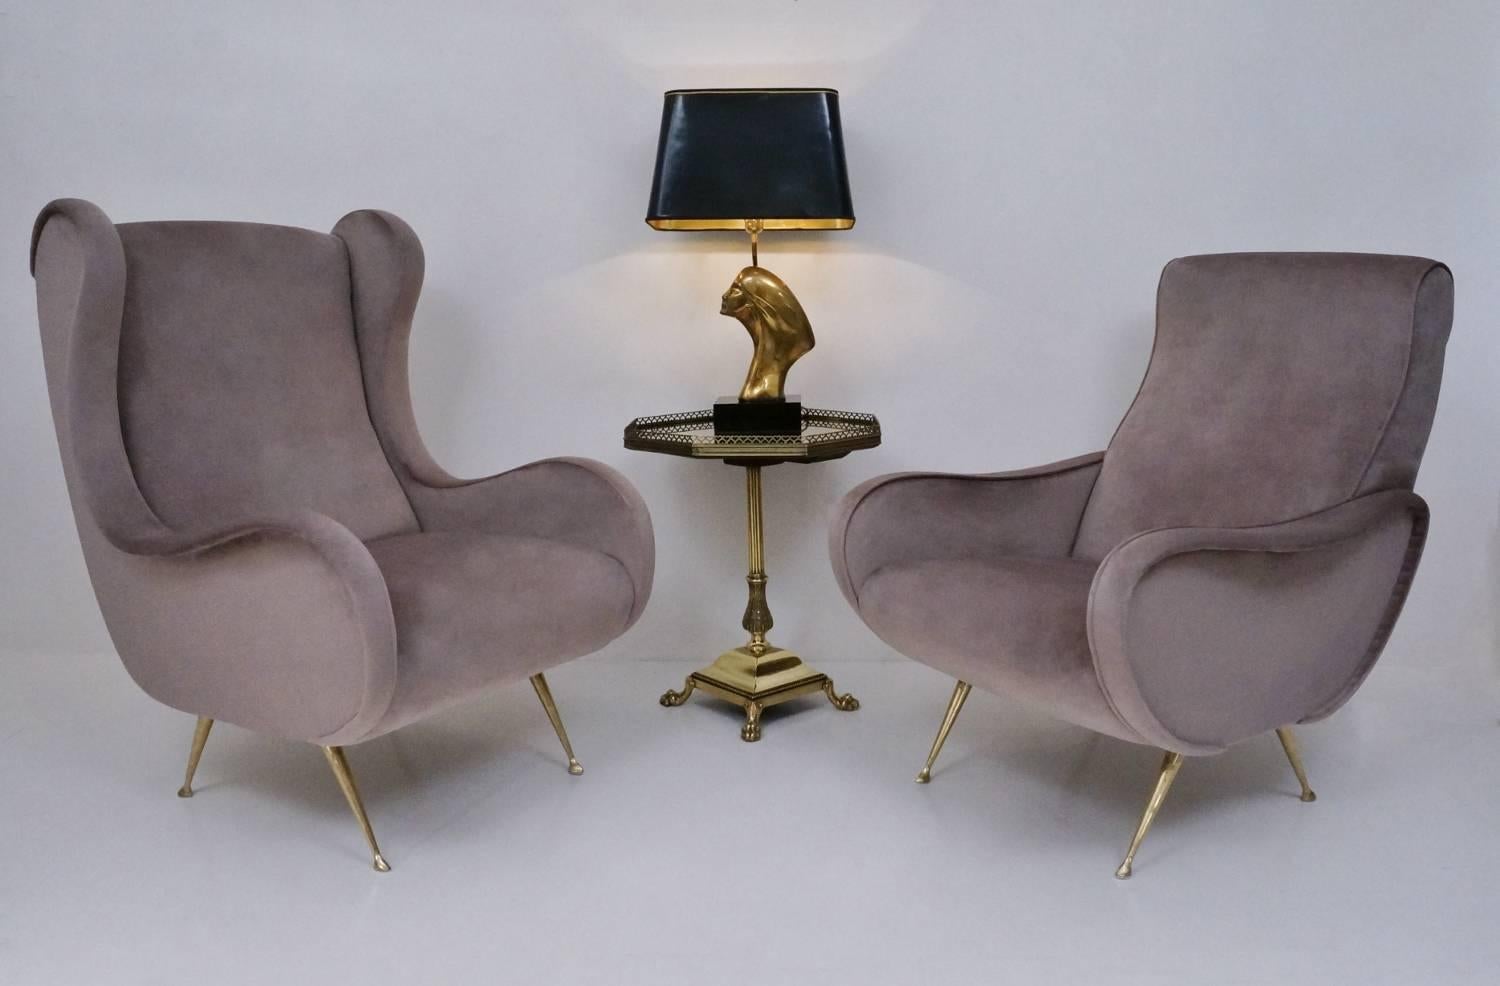 Marco Zanuso Style Senior Armchair, Available in 25 Colors of Velvet, Italian For Sale 7